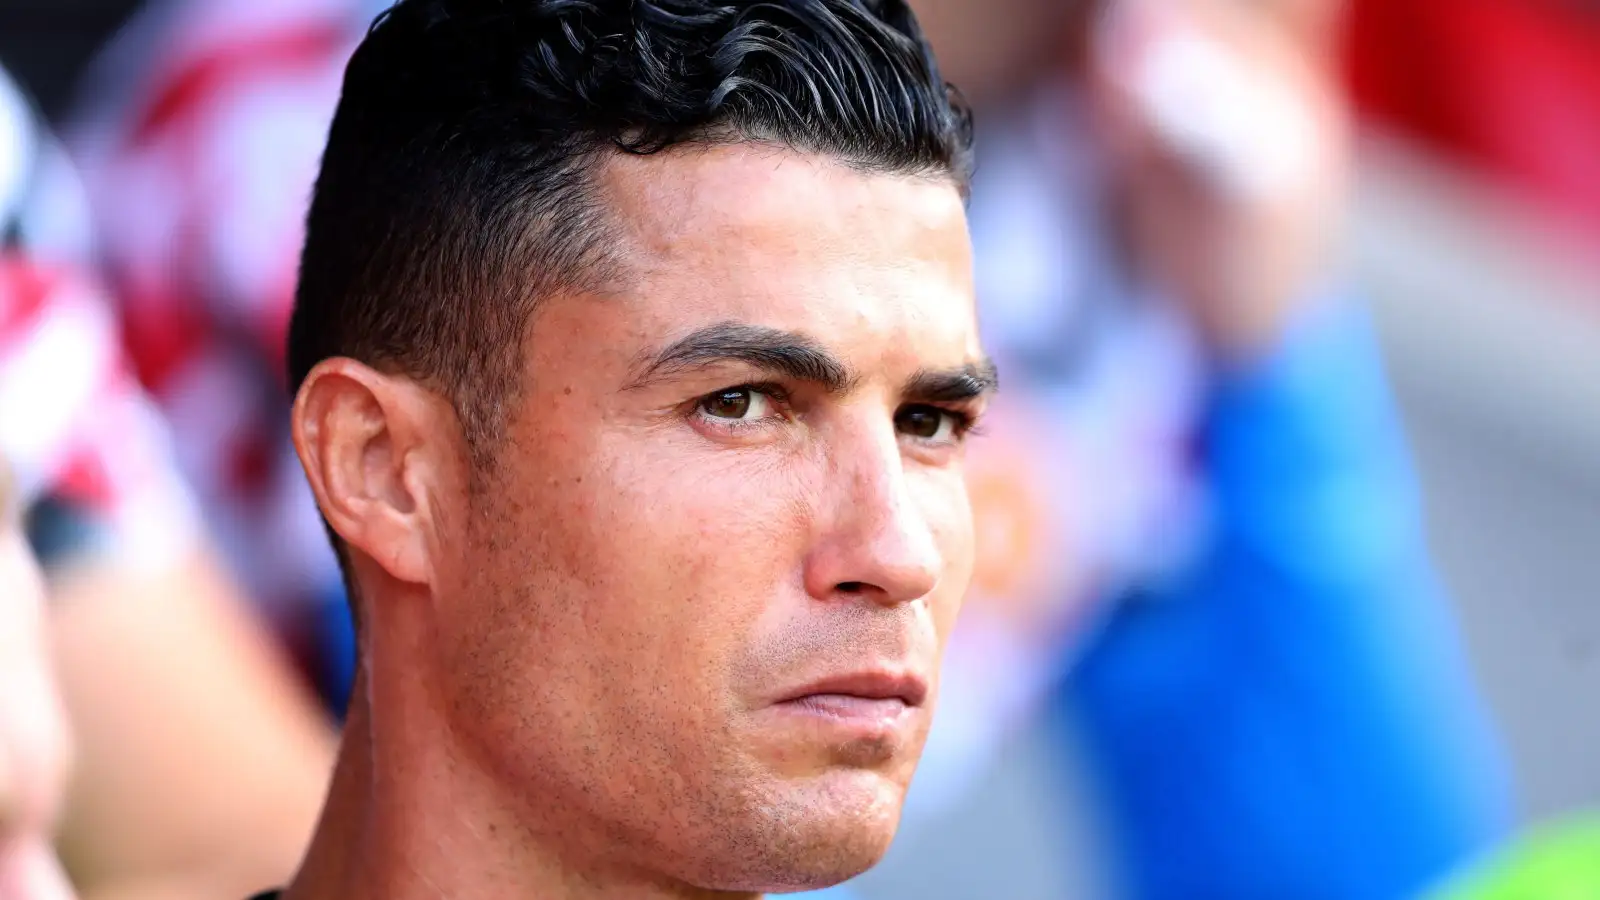 Former Man Utd striker Cristiano Ronaldo looks upset